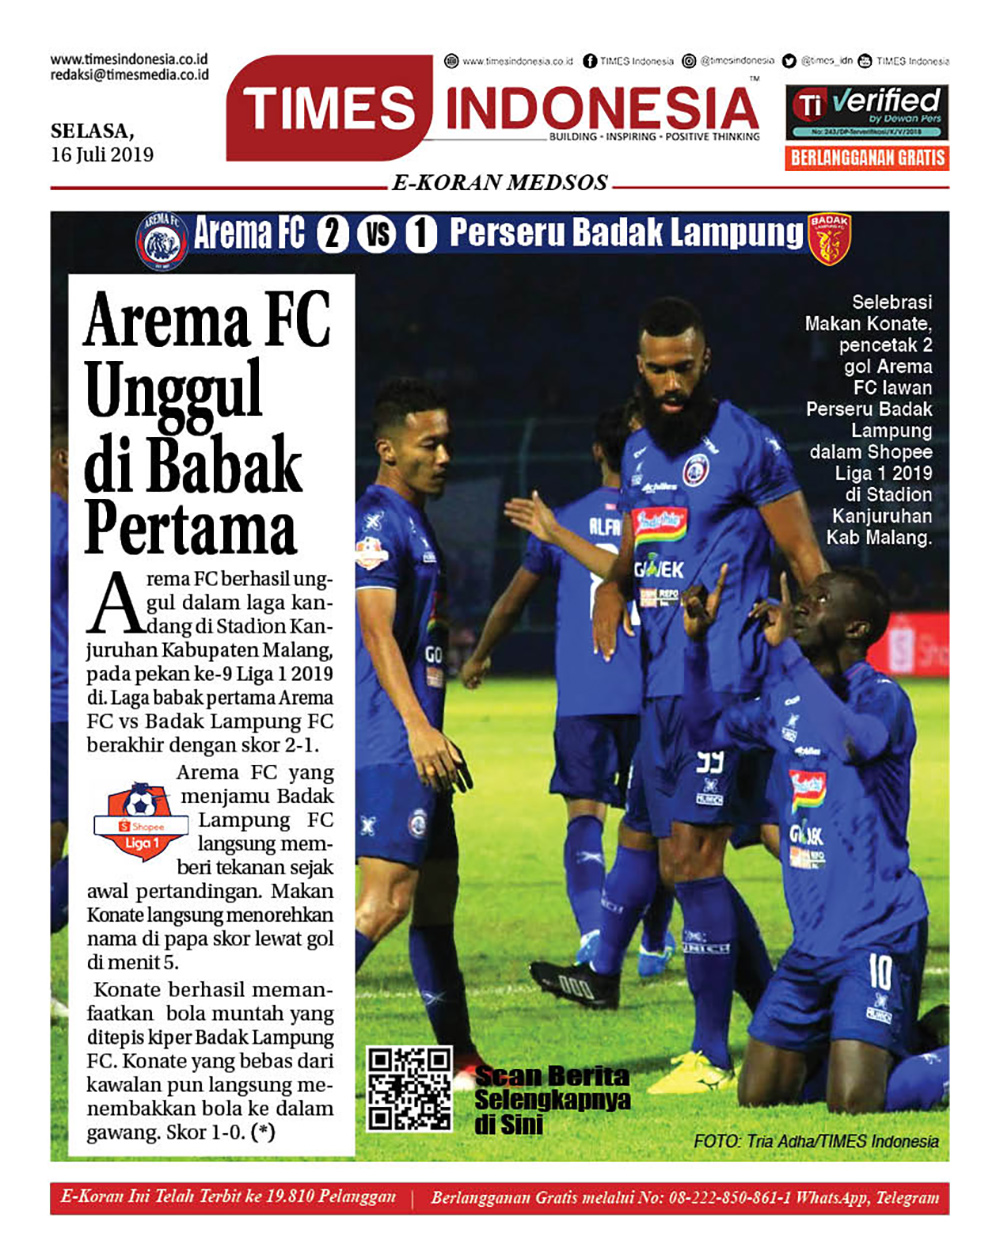 edisi-Selasa-Malam-16-Juli-2019-Arema-FC.jpg